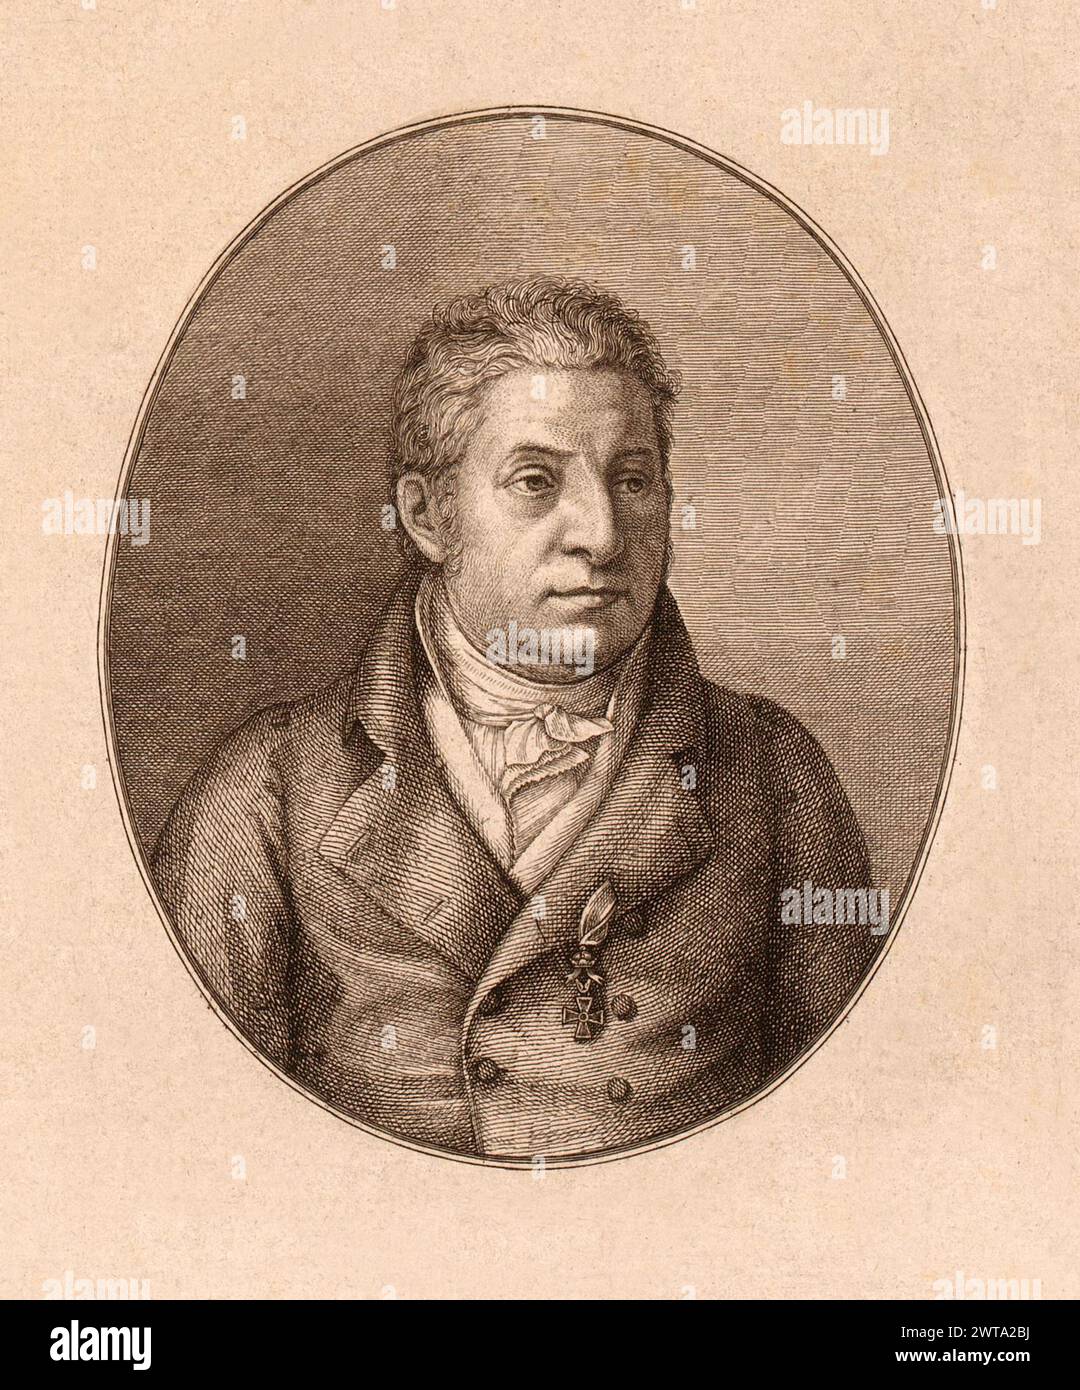 1810 c., AUSTRIA : The austrian painter and engraver ADAM BARTSCH ( 1757 - 1821 ).  Portrait engraved by Heinrich Gustav Adolf Leybold .  - AUTORITRATTO - SELF PORTRAIT - HISTORY - FOTO STORICHE  - ARTS - ARTE  - incisione - engraving - illustration - illustrazione - uomo - man - RITRATTO - PORTRAIT ---  Archivio GBB Stock Photo